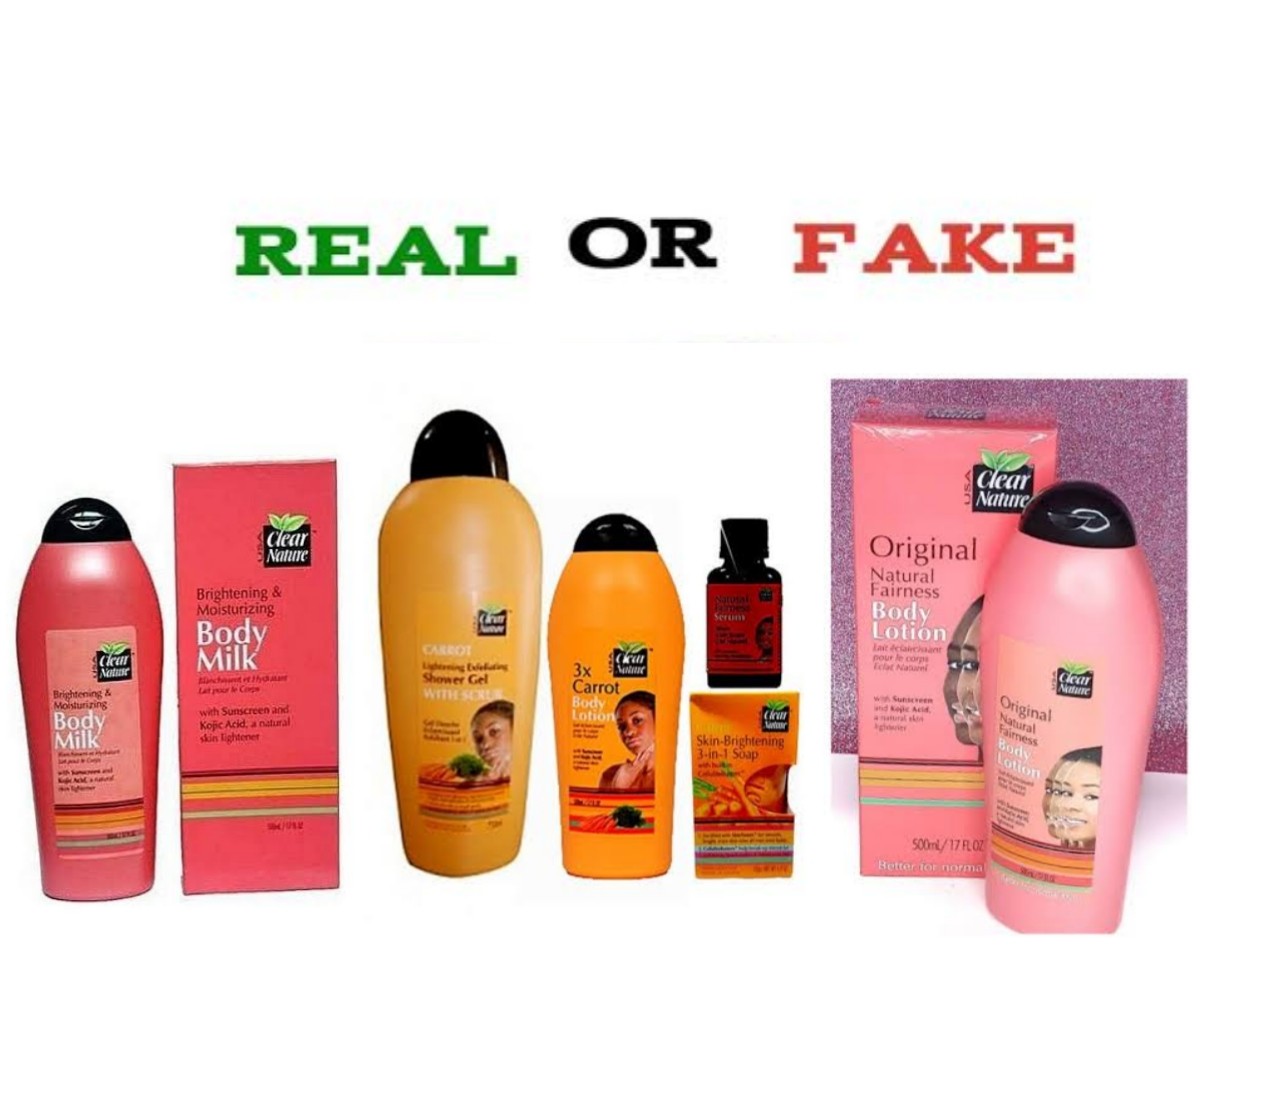 How To Spot Fake Clear Nature Cream Vs Original